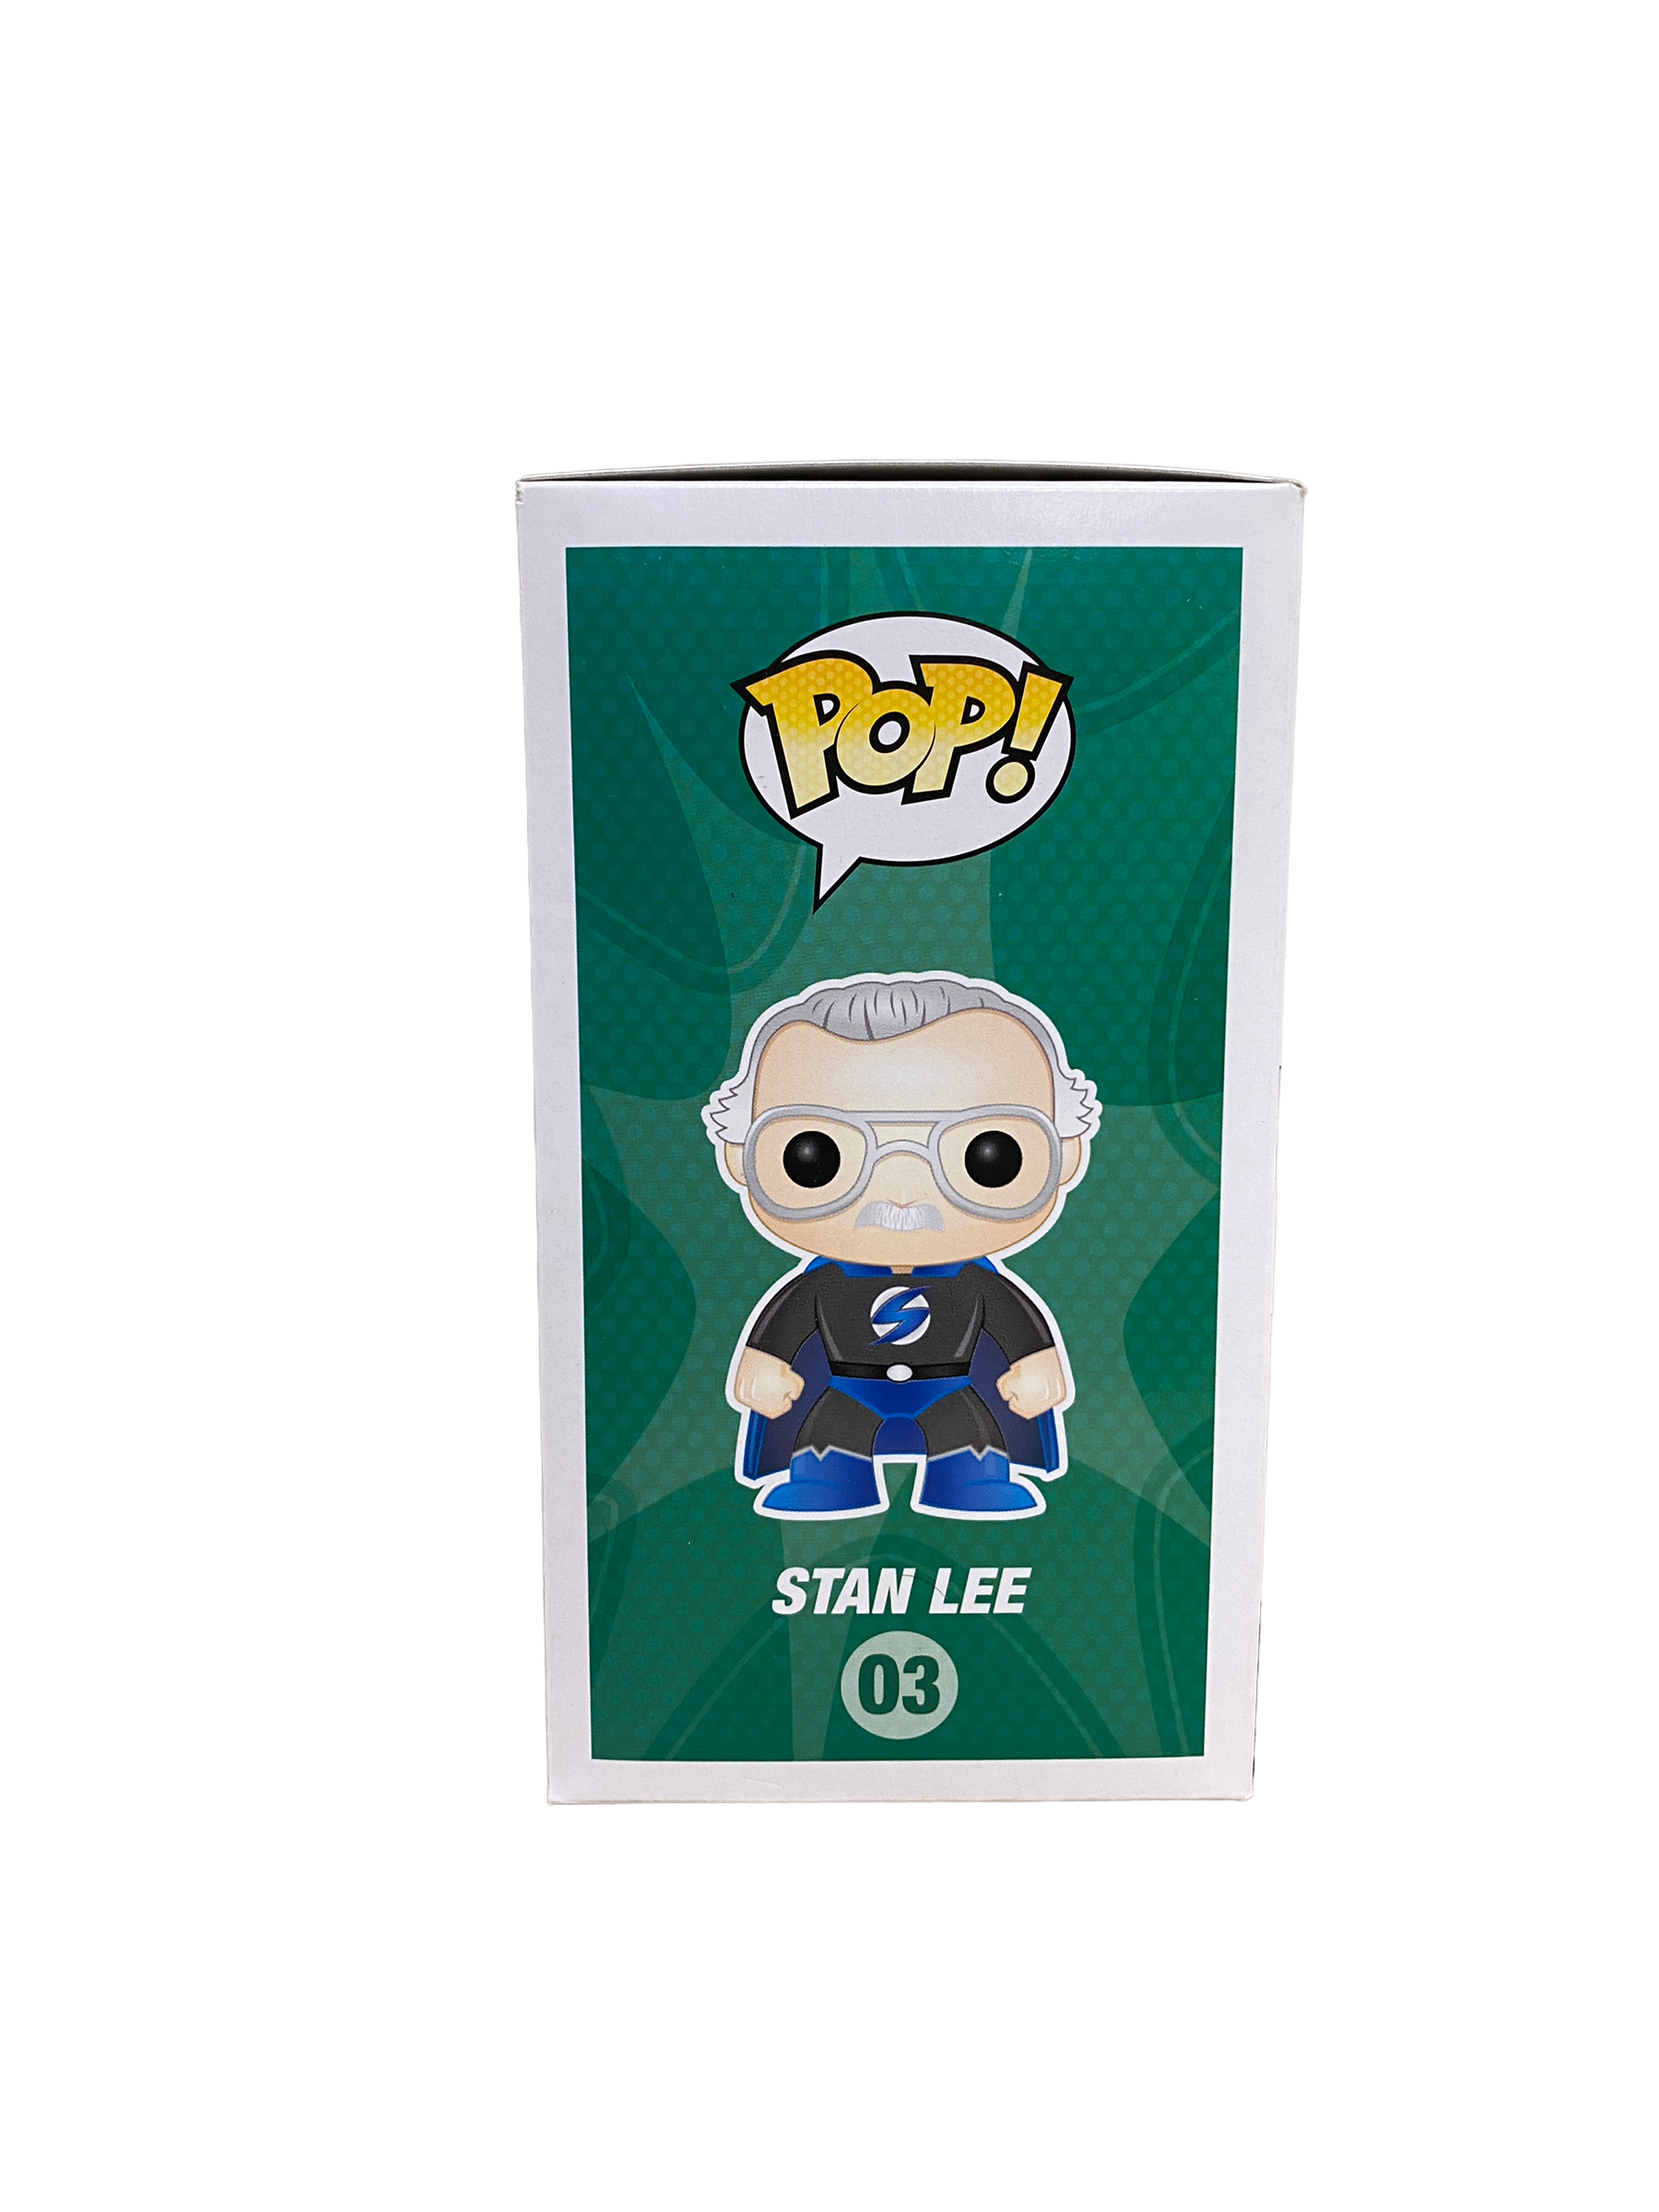 Stan Lee #03 (Superhero) Funko Pop! - Stan Lee Collectibles - NYCC 2015 Exclusive LE1500 Pcs - Condition 8.75/10